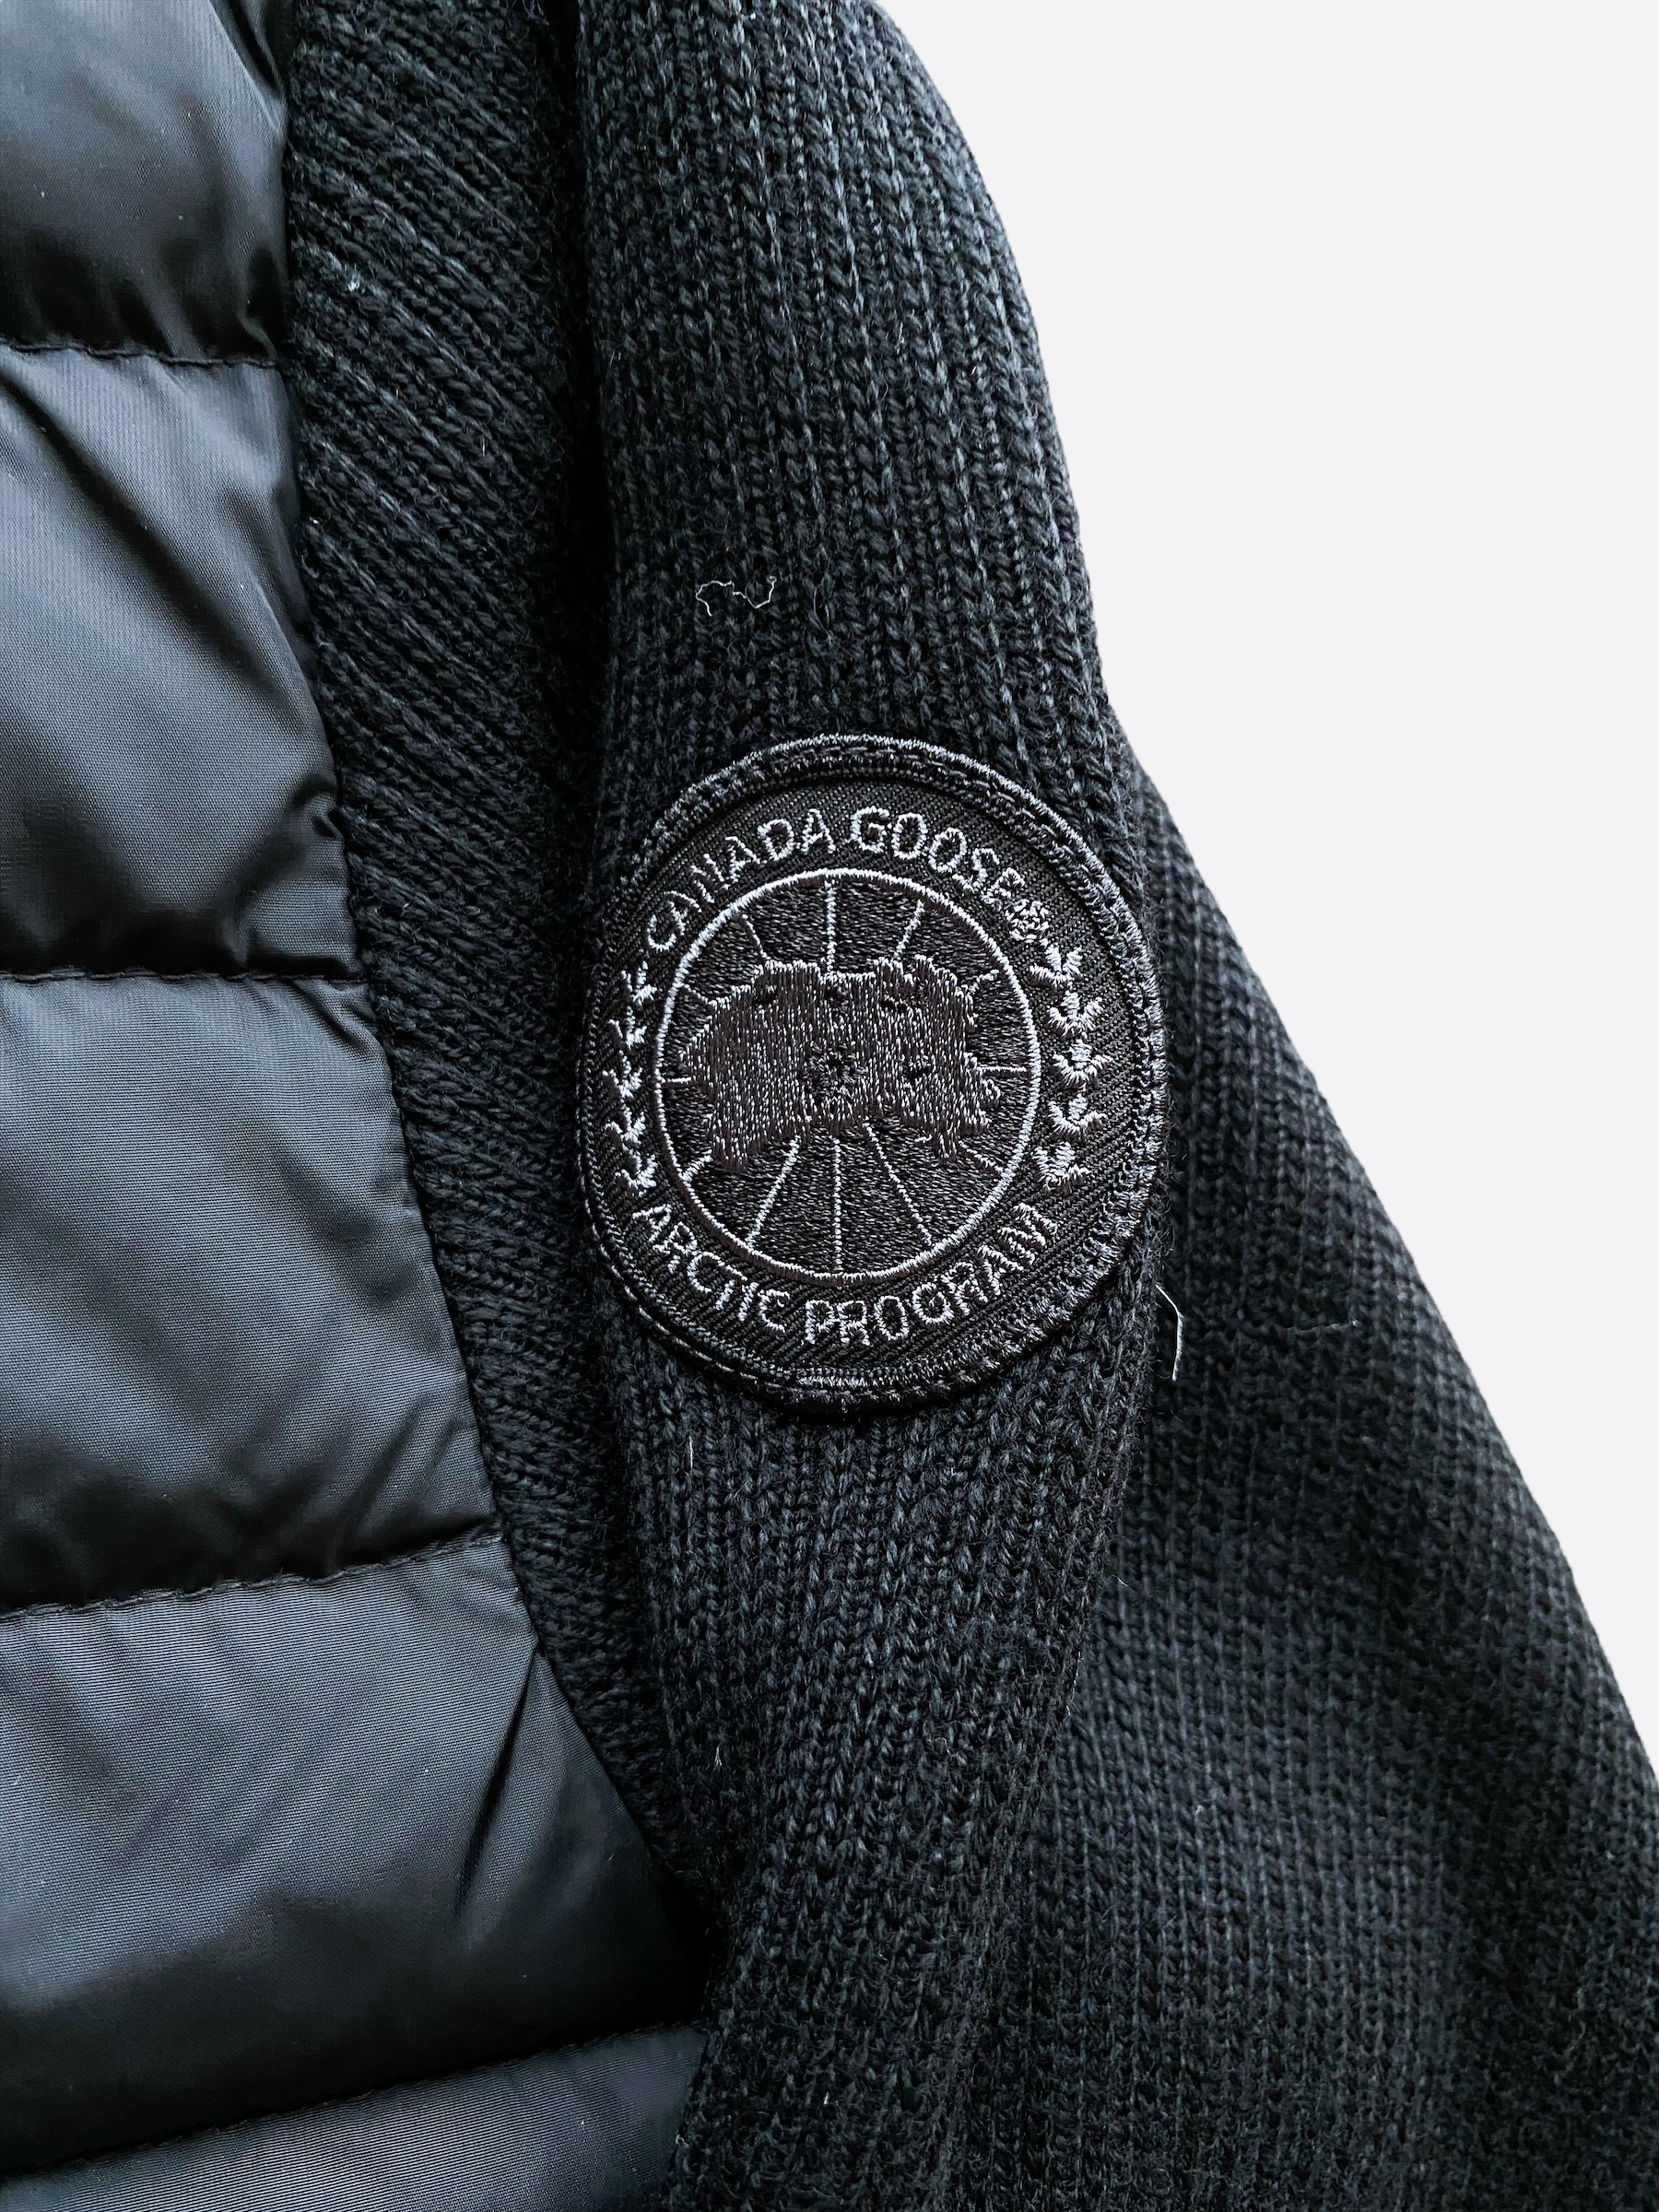 Canada Goose Black Label Hybridge Knit Down Jacket Black